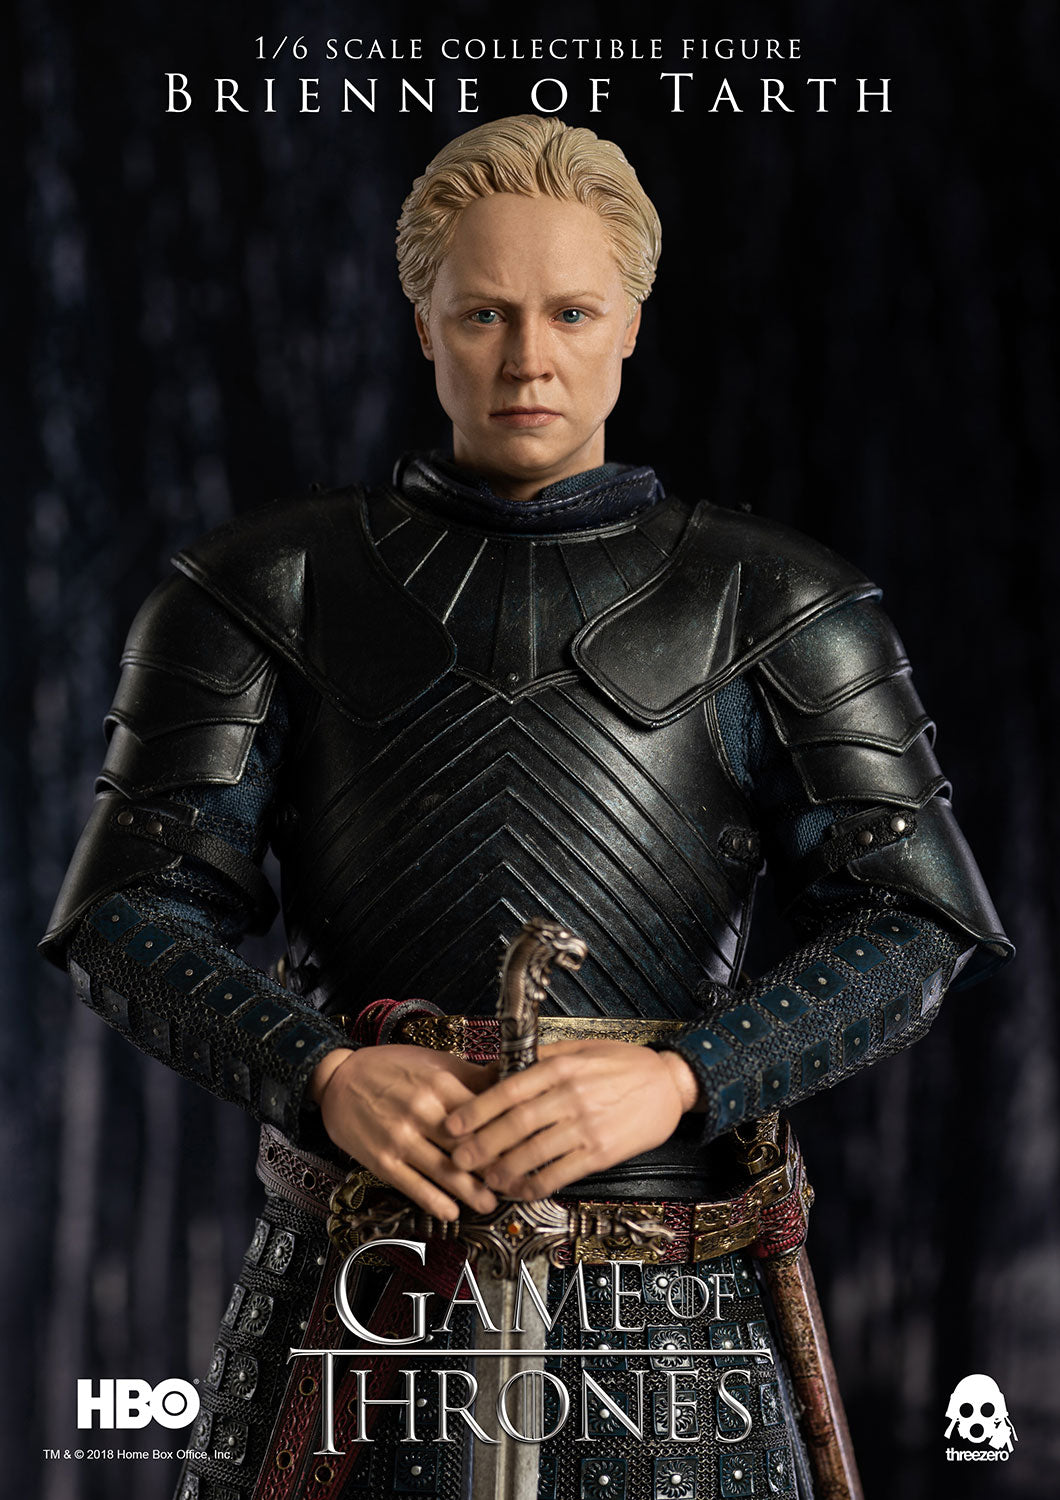 ThreeZero - Game of Thrones (Season 7) - Brienne of Tarth (Deluxe) (1/6 Scale) - Marvelous Toys